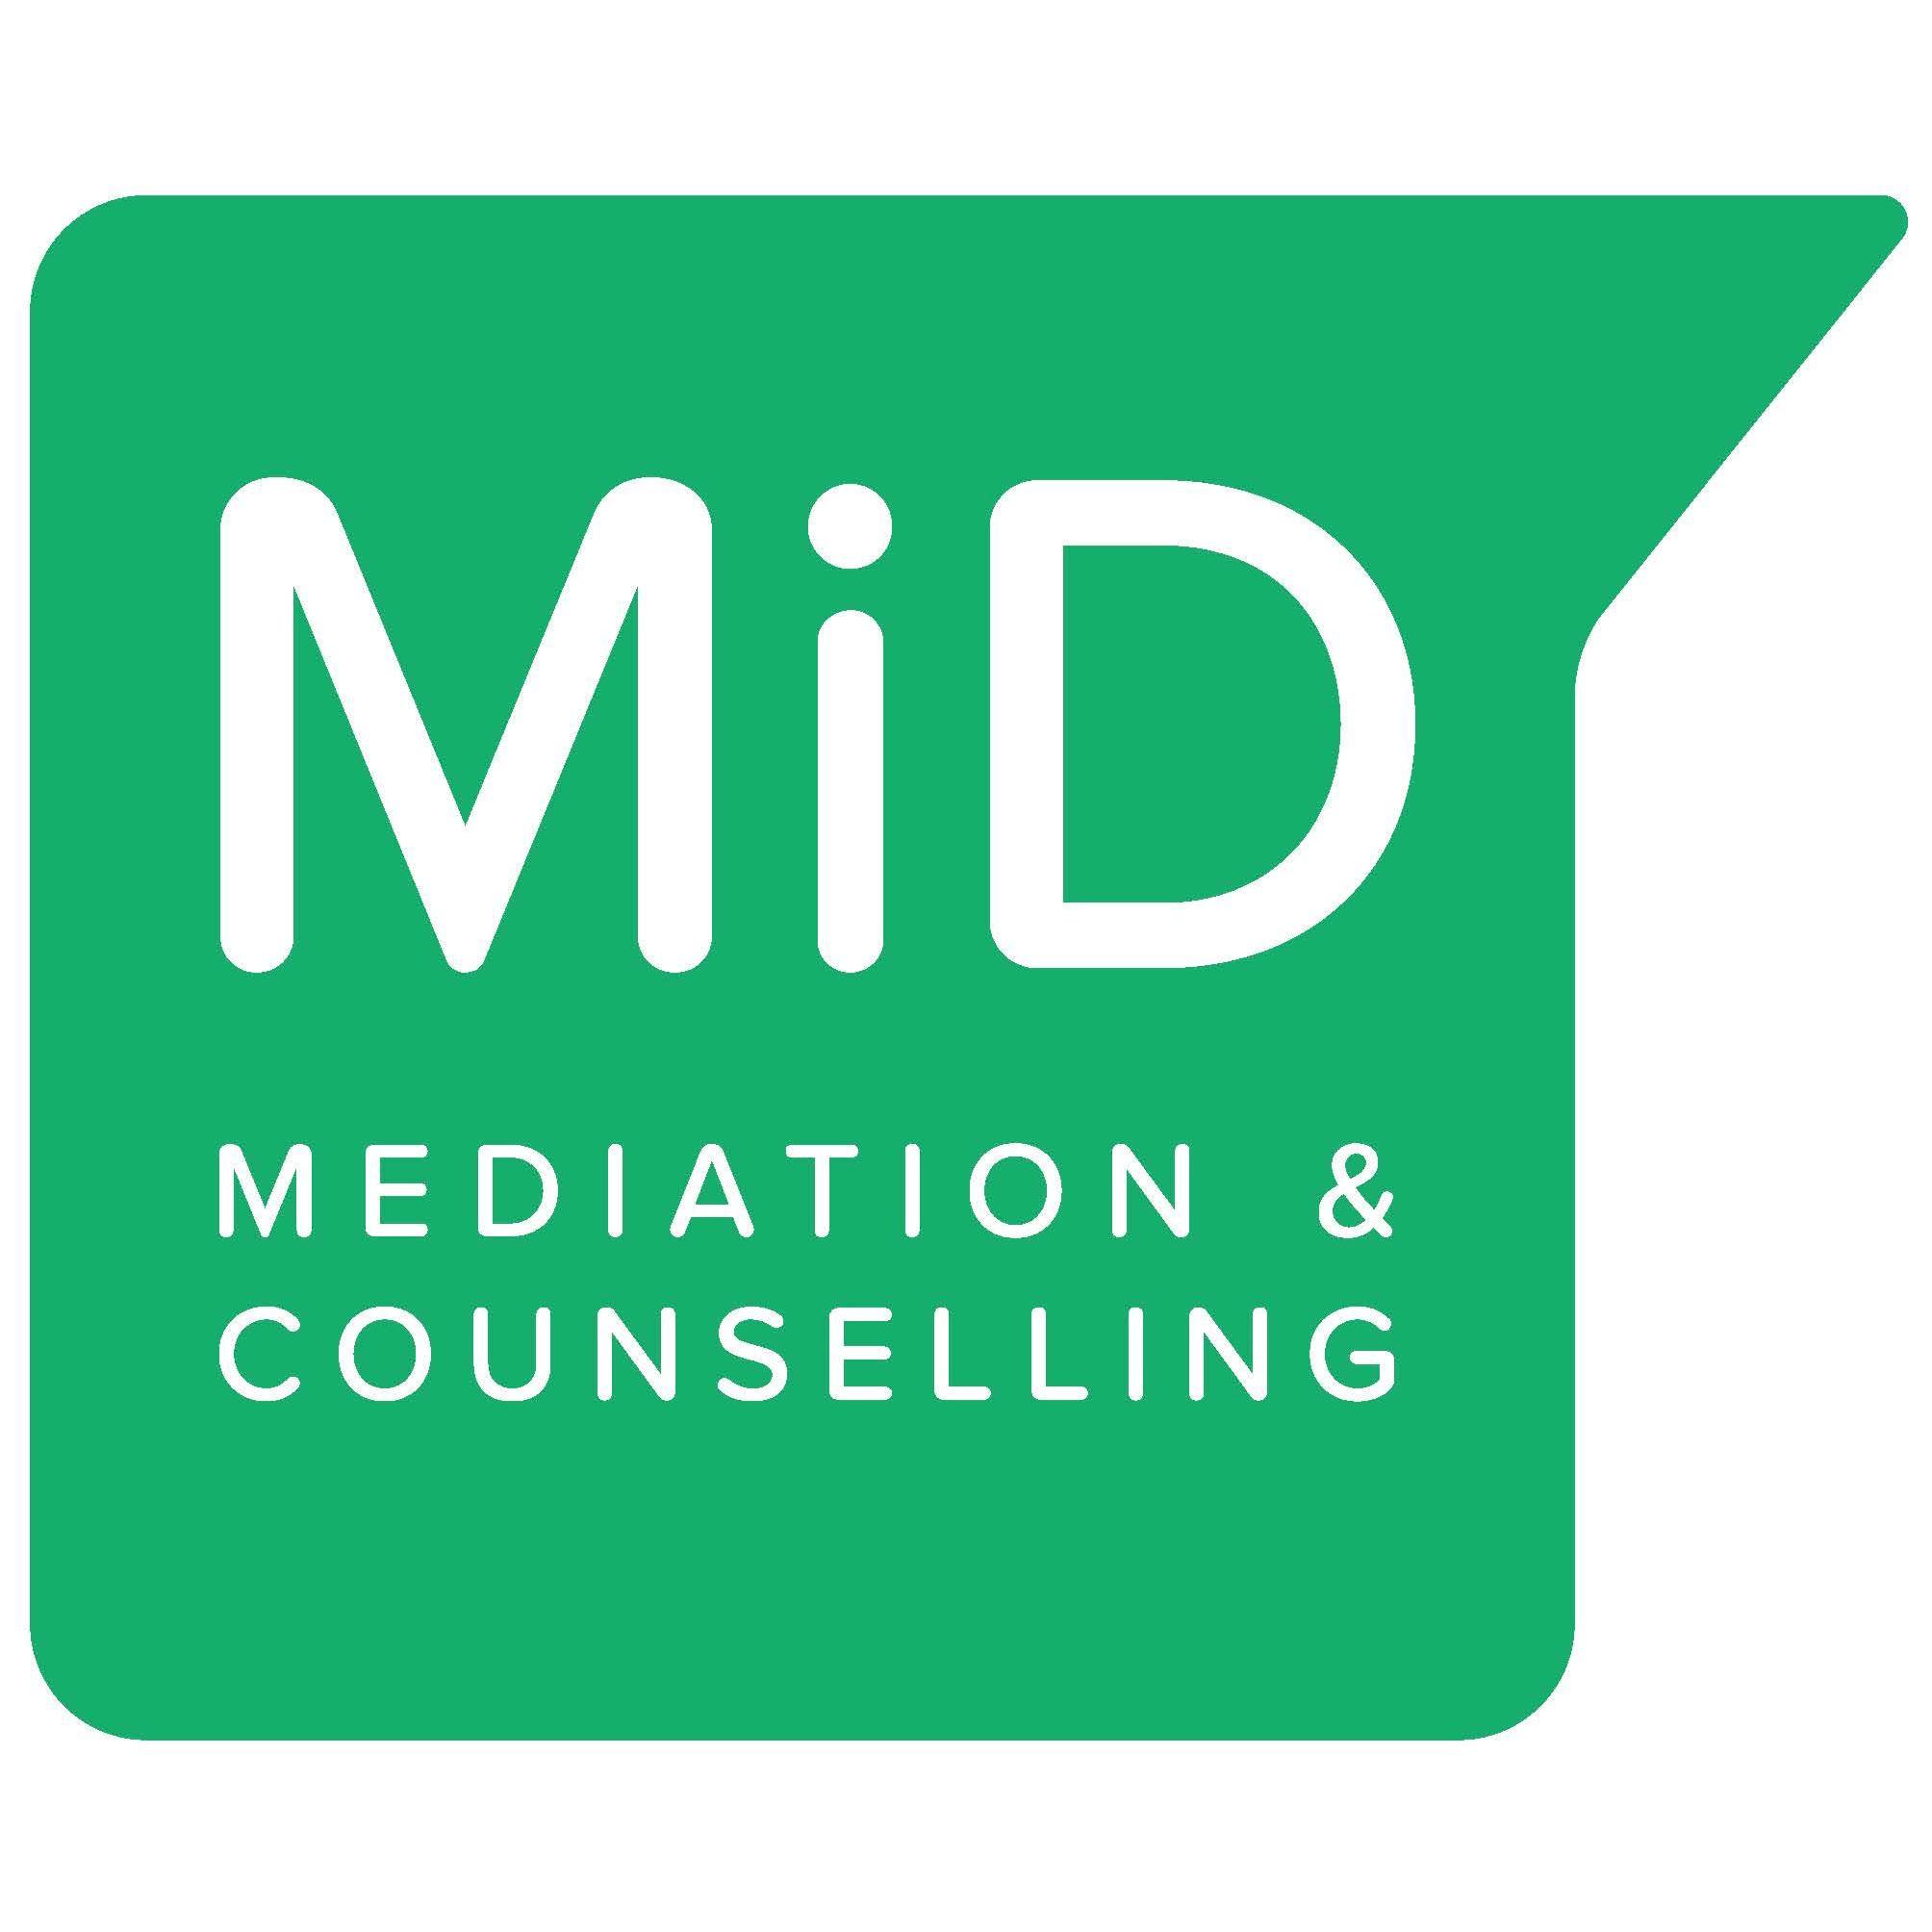 M I D Mediation & Counselling - Hampton, London TW12 1NT - 020 8891 6860 | ShowMeLocal.com